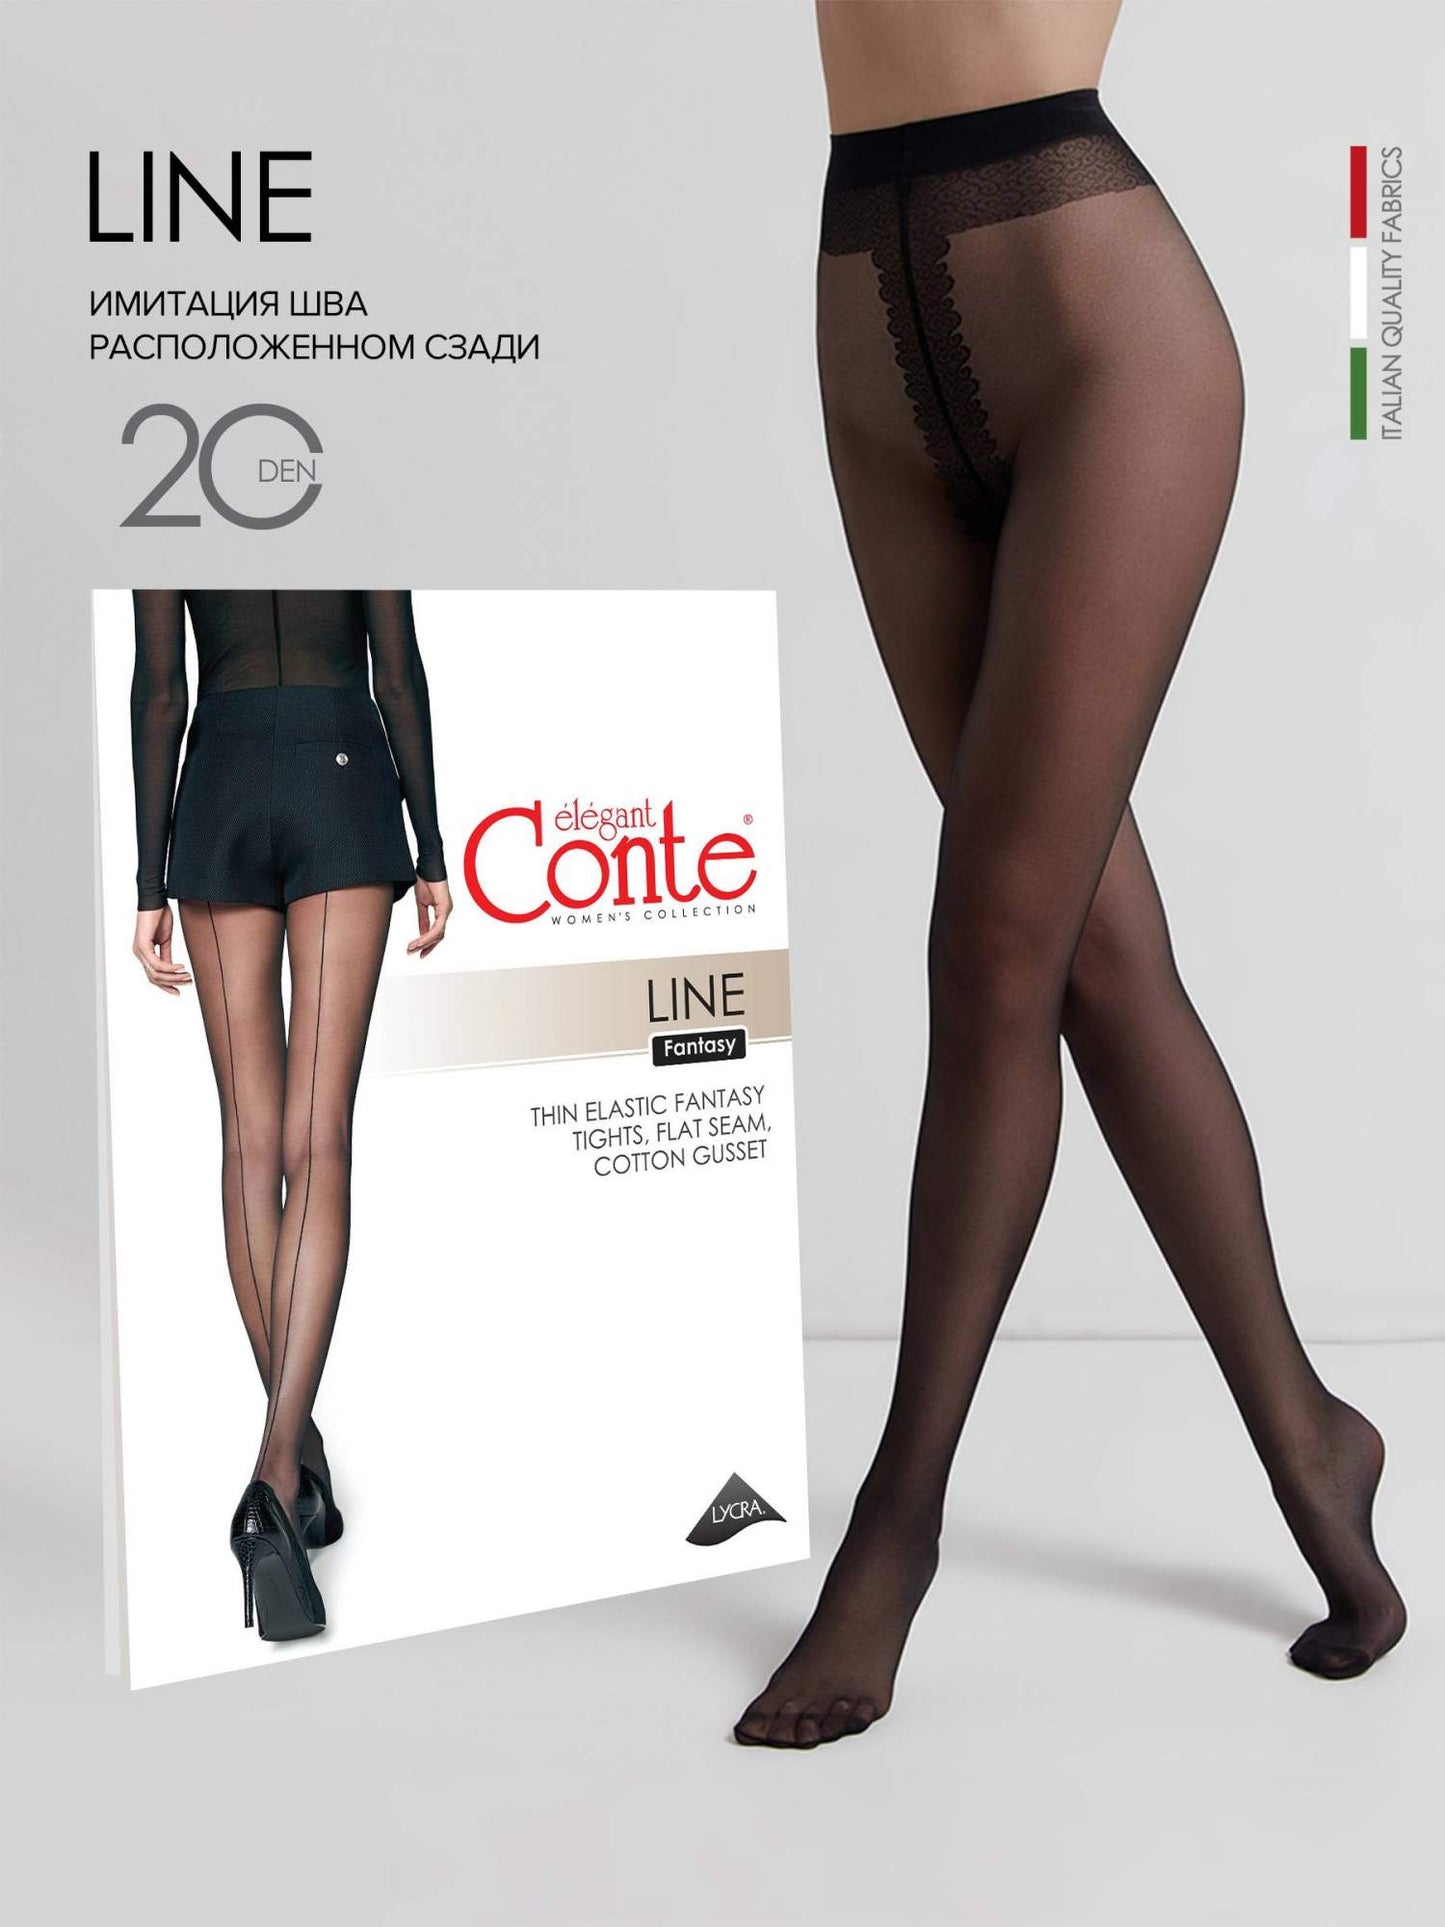 Conte Line 20 Den - Fantasy Women's Tights with an imitation seam (20С-45СП)